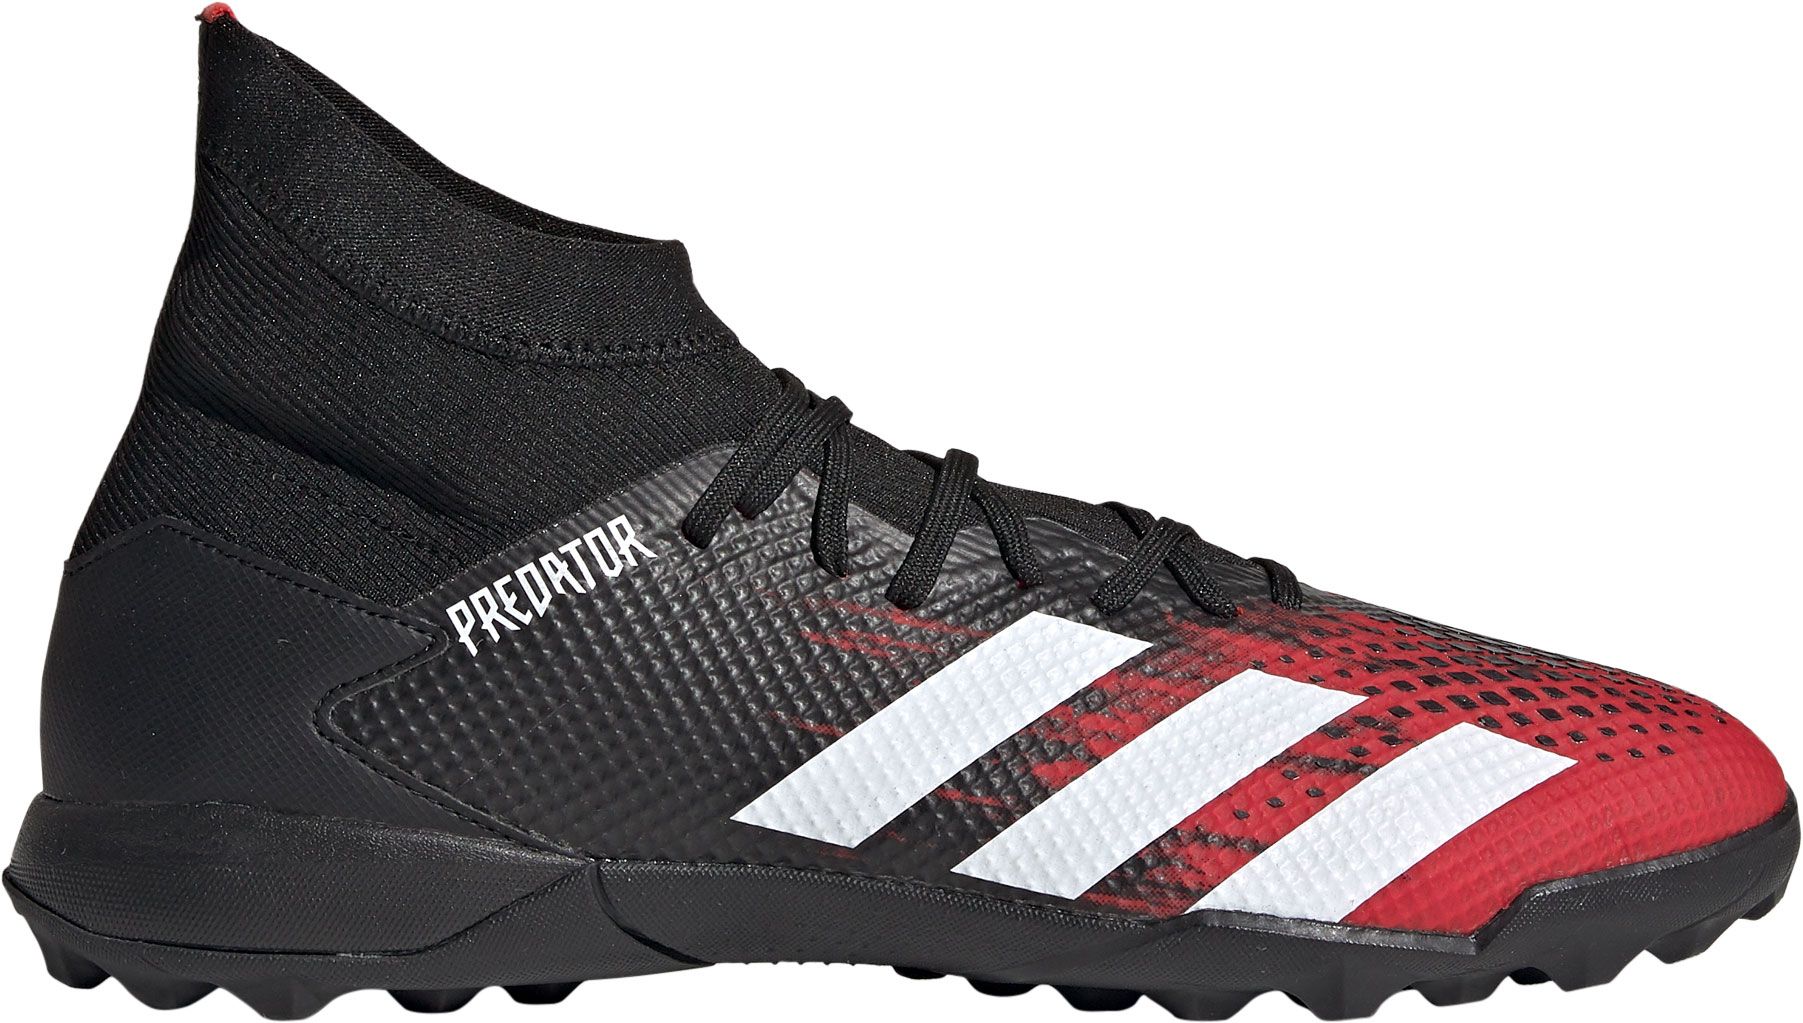 adidas soccer shoes mens